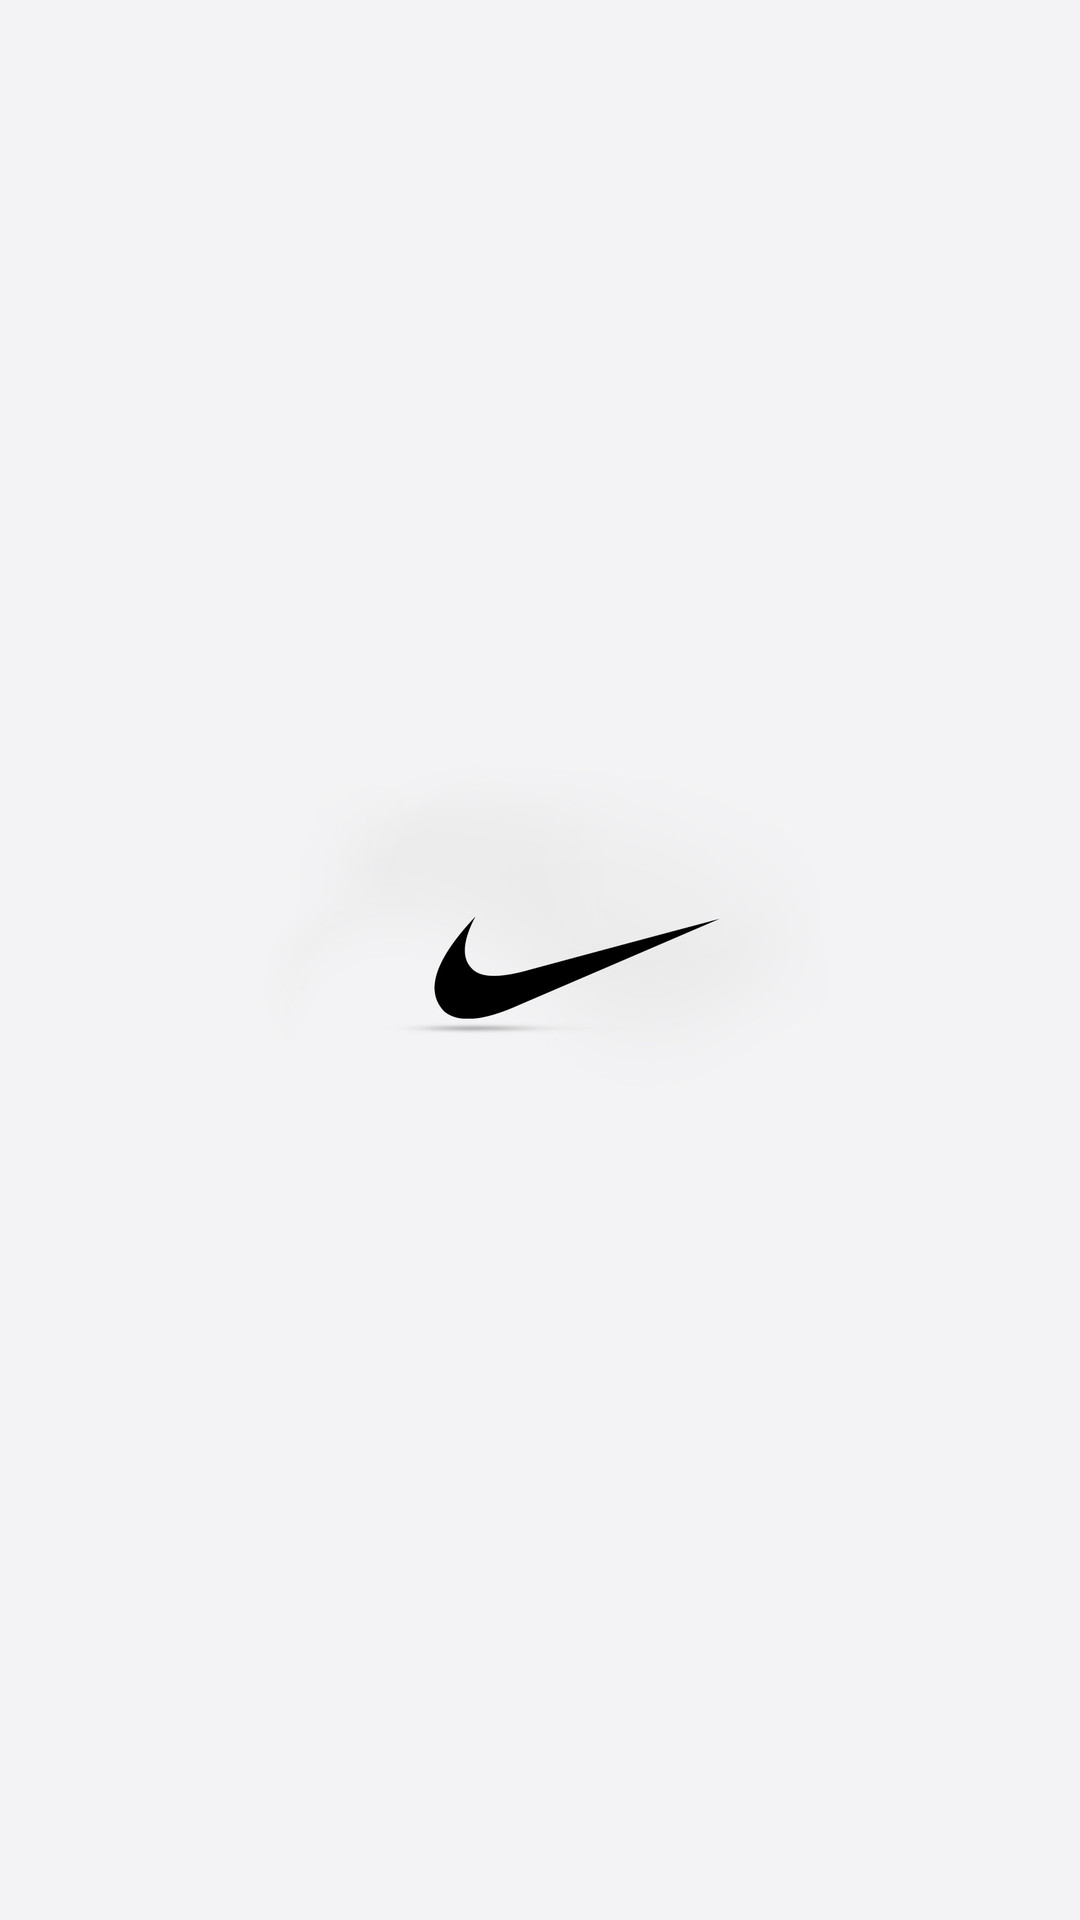 1080x1920 Nike Black And White Logo Wallpaper IPhone